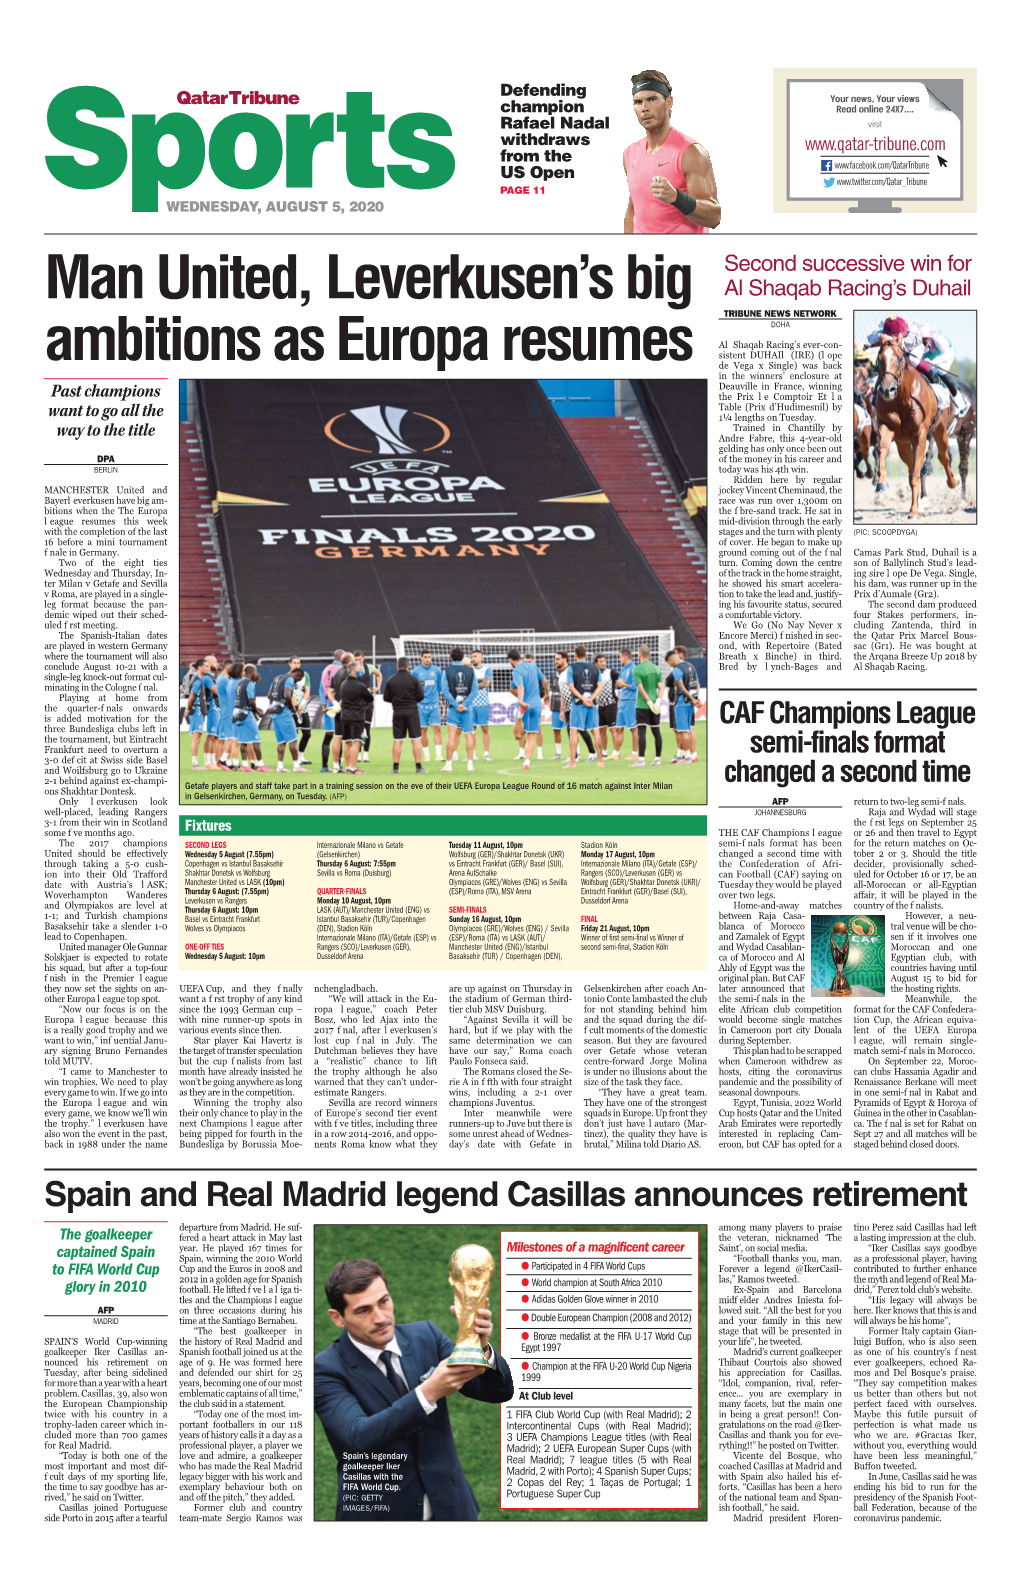 Man United, Leverkusen's Big Ambitions As Europa Resumes